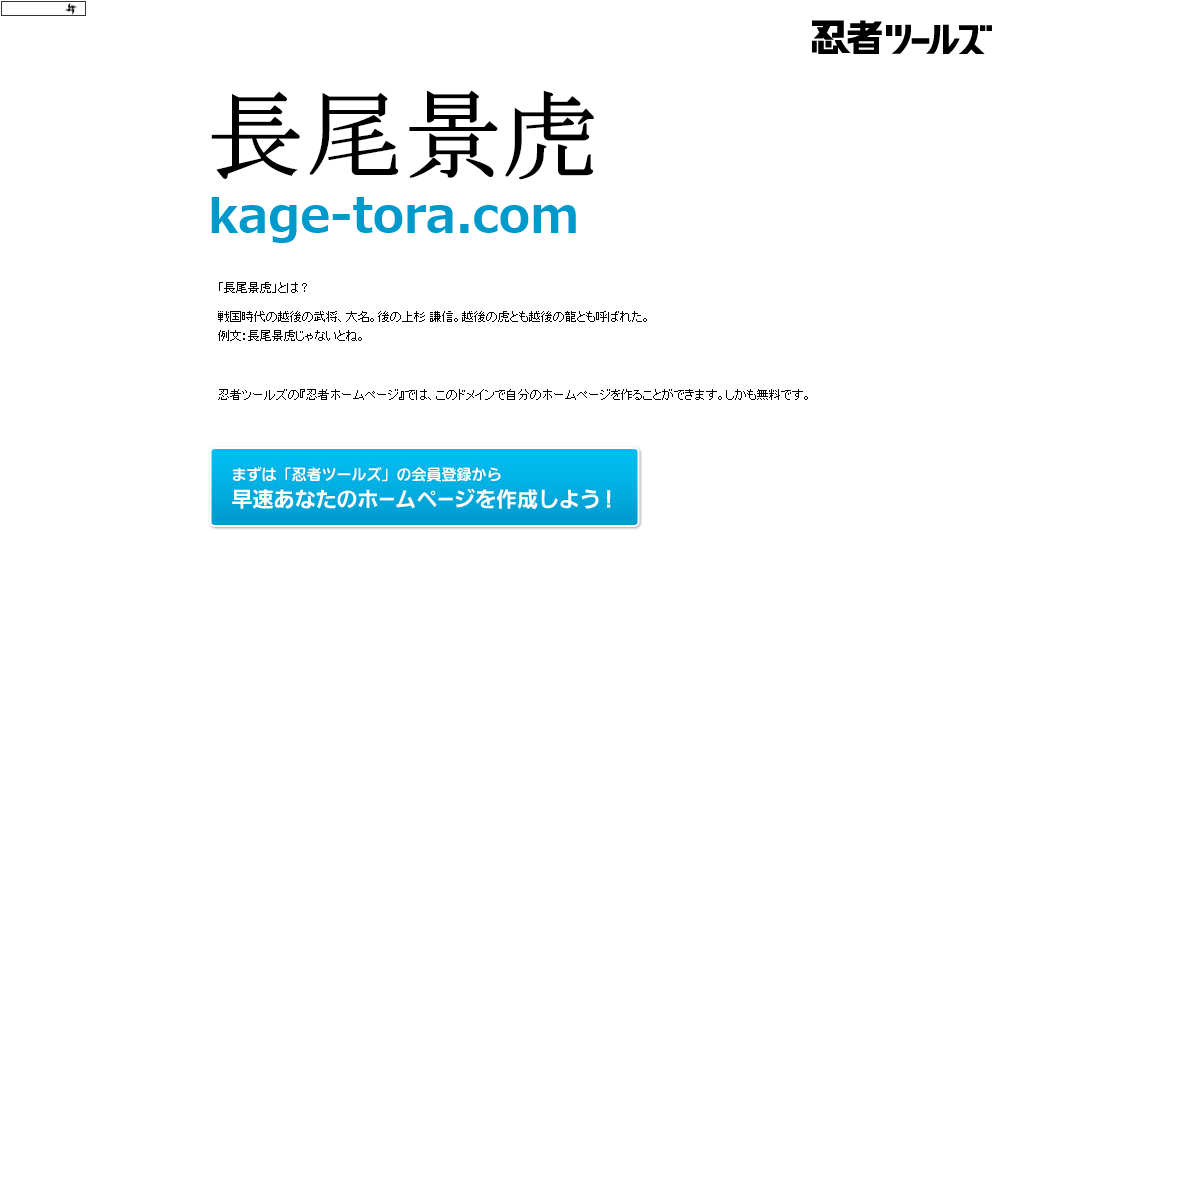 A complete backup of kage-tora.com